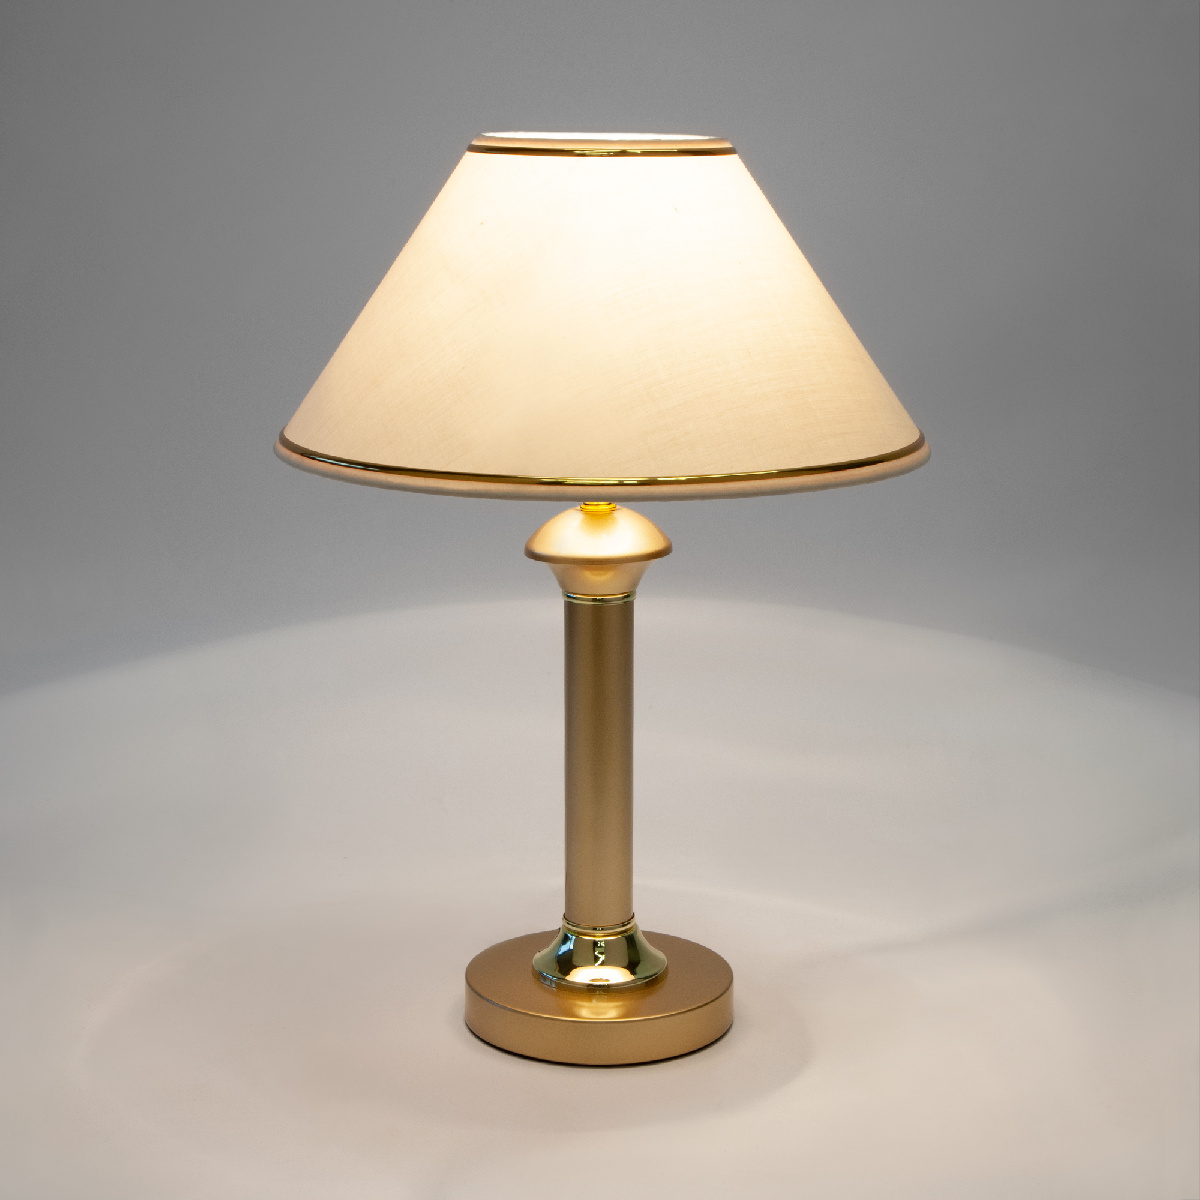 Настольная лампа Eurosvet Lorenzo 60019/1 перламутровое золото